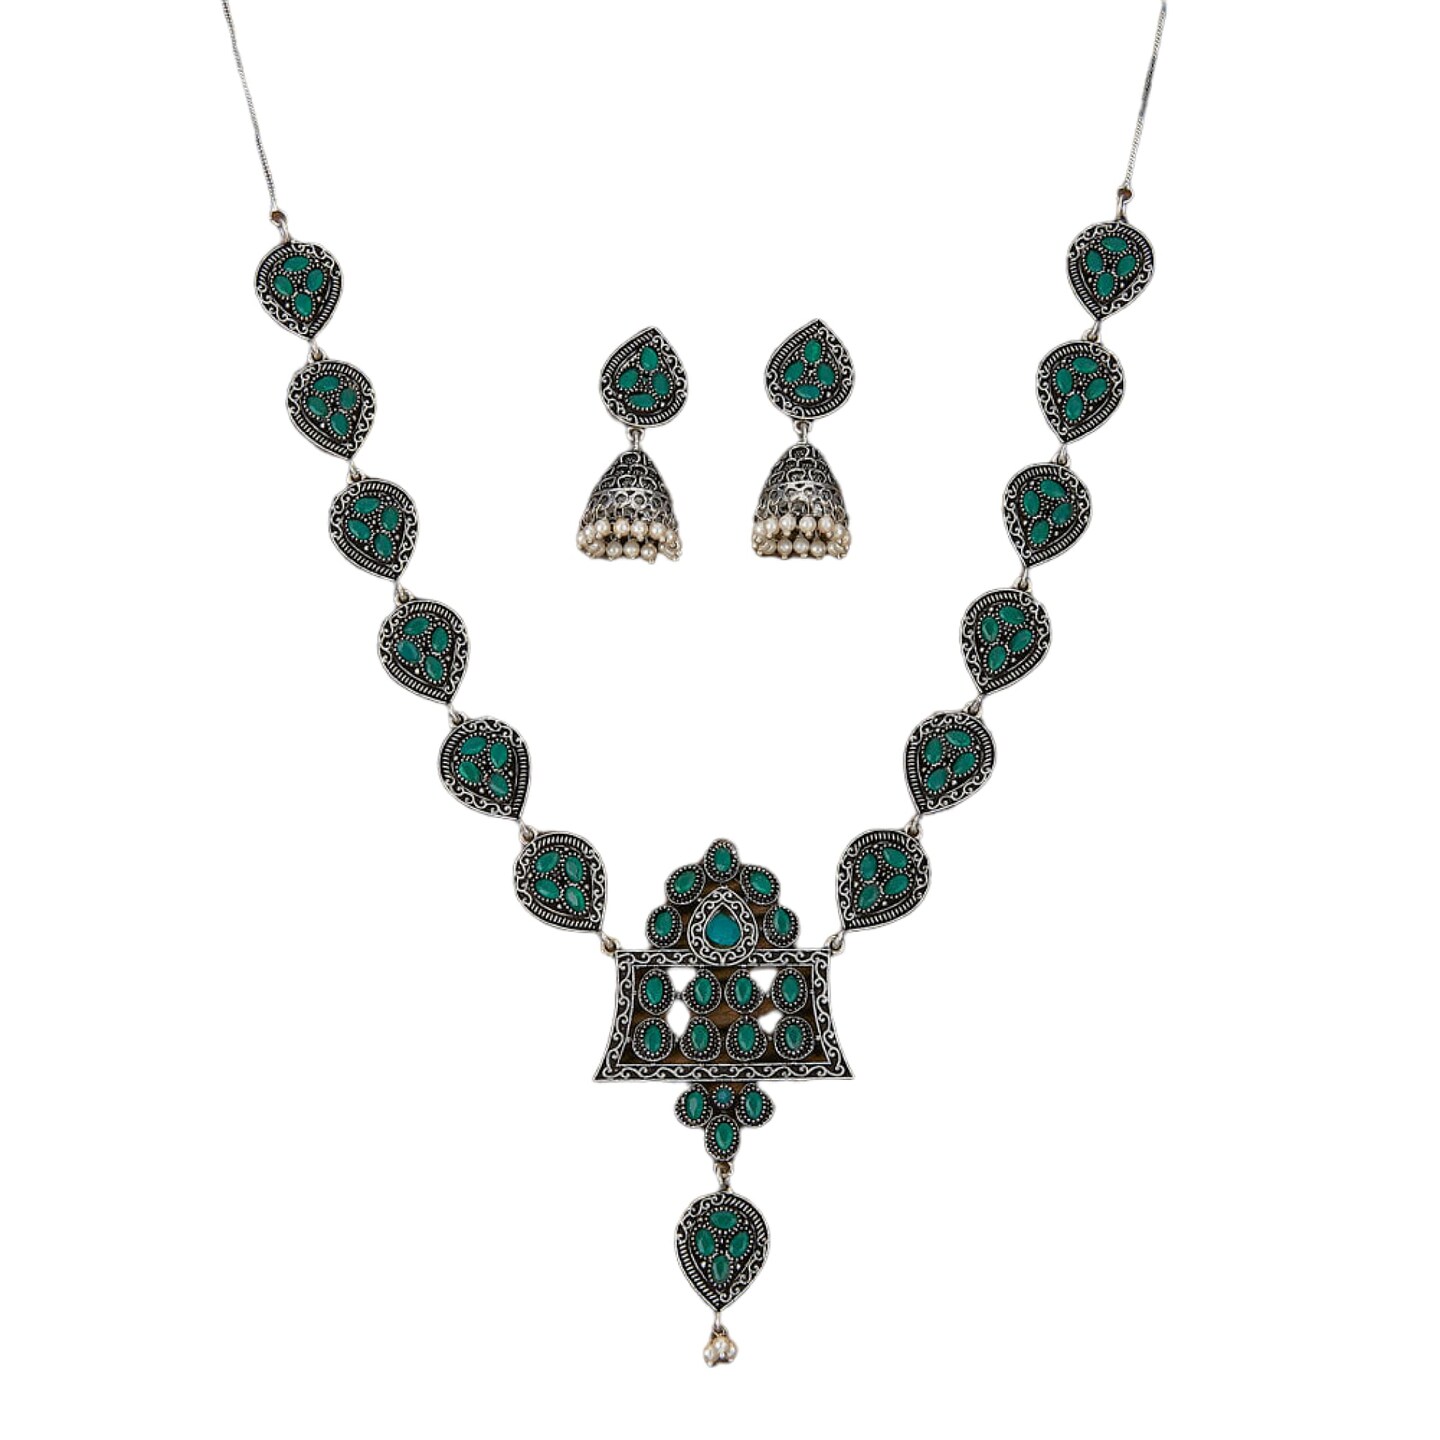 Indian Oxidized Jewelry Boho Tribal Jewelry Indian Long Necklace Bohemian Jewelry Afghani Tribal Tassel Long Ghungroo Necklace Earrings Set Choker Necklace Fashion Jewelry